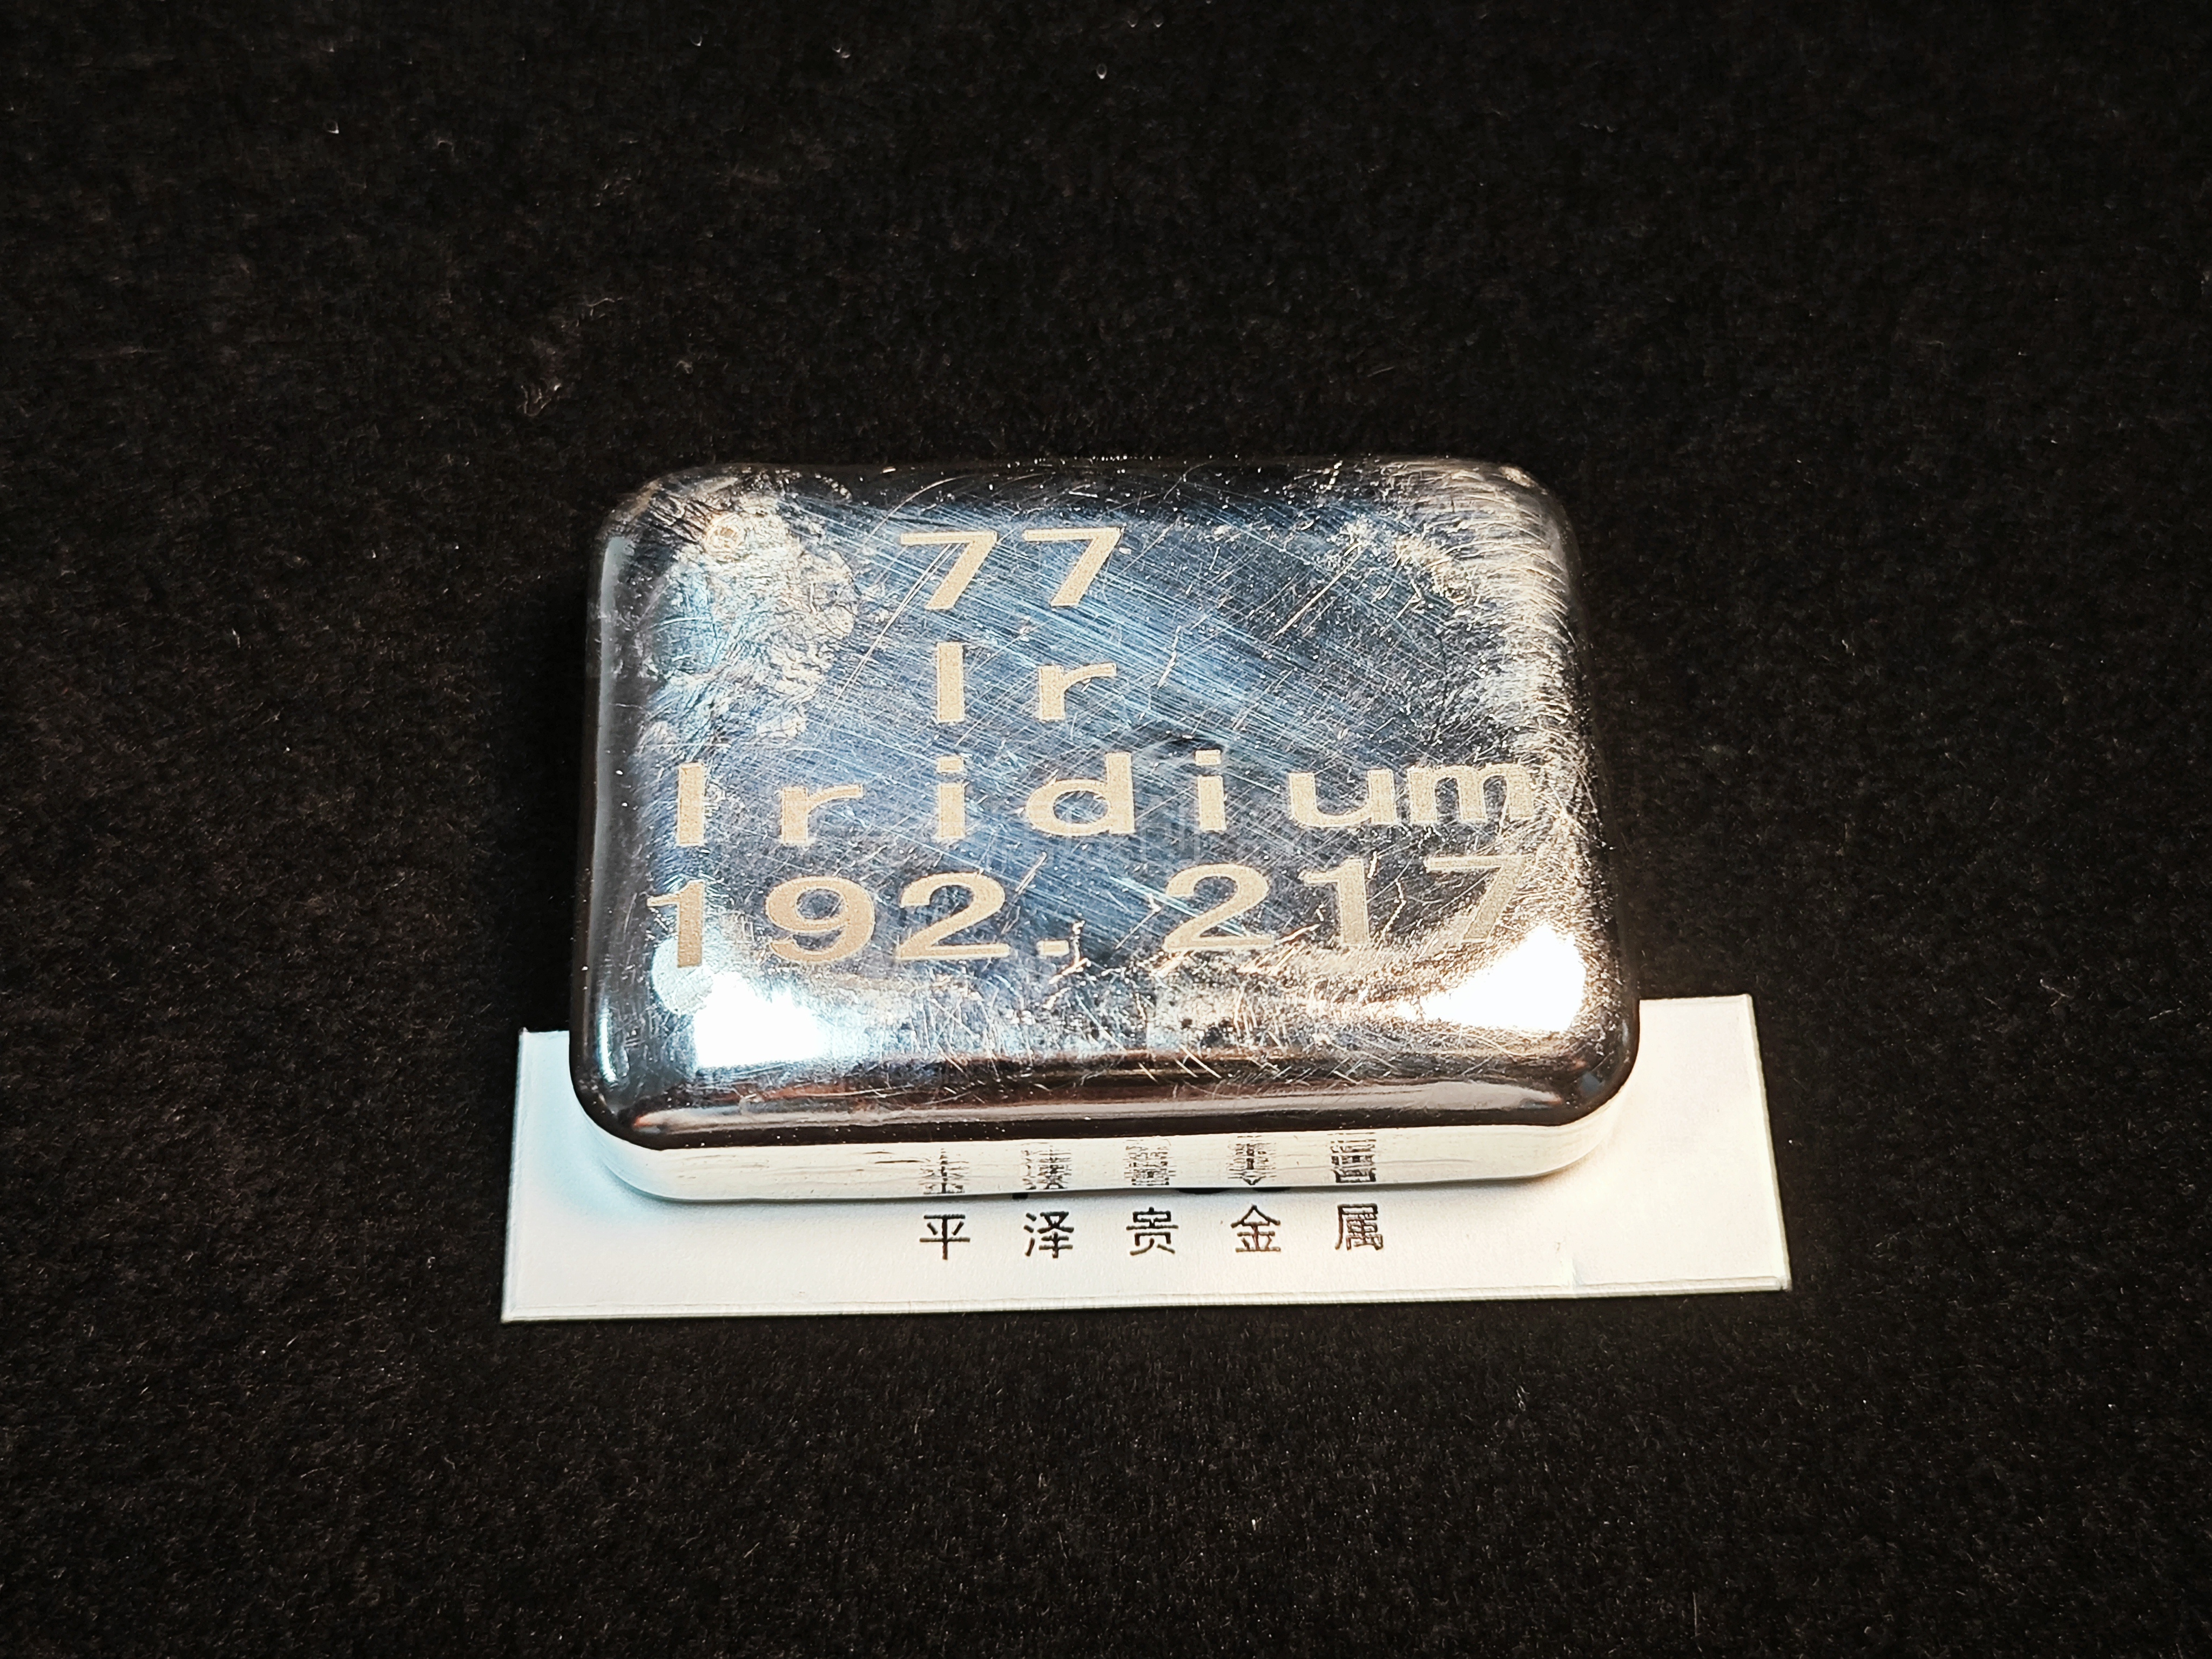 Where was the iridium found? The case of precious metal refining